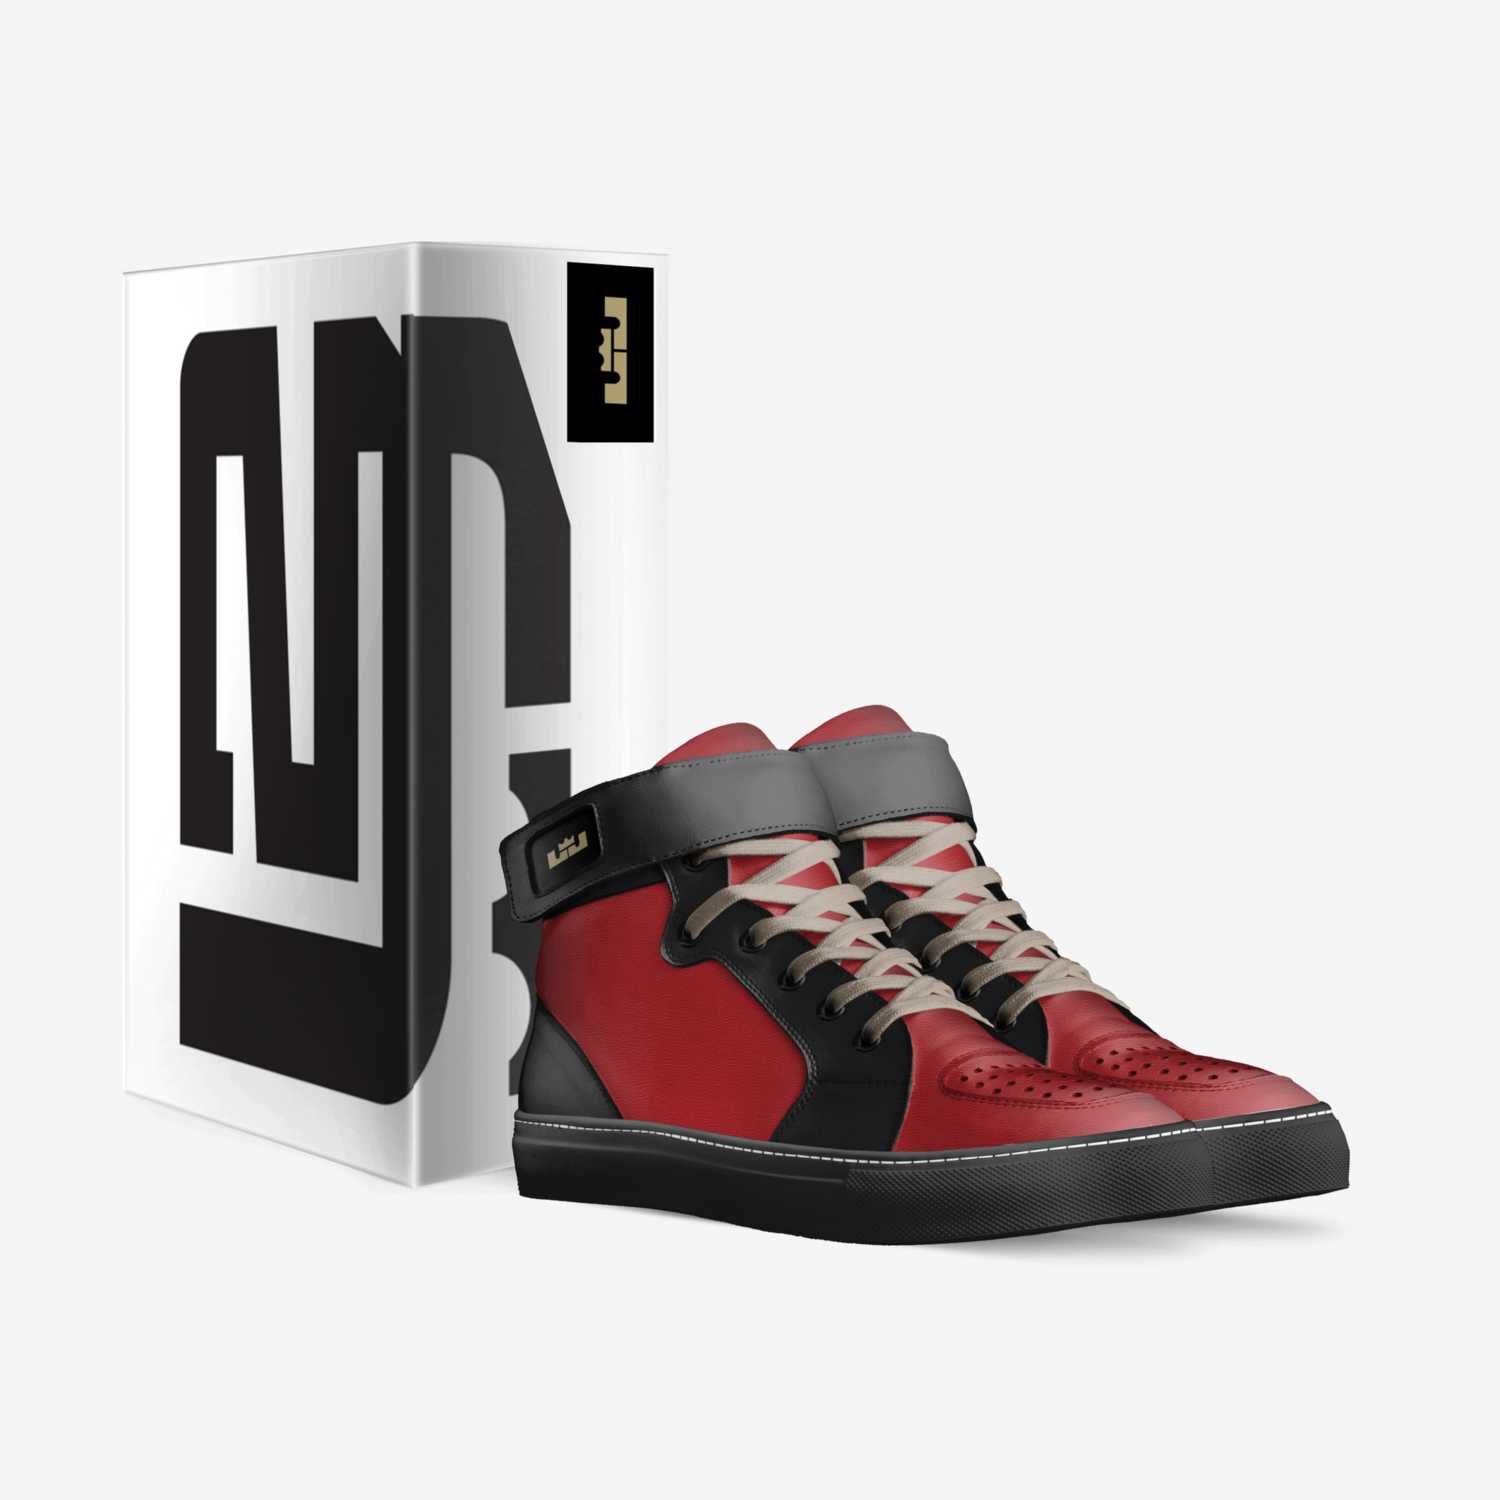 emil soilder 100 custom made in Italy shoes by Emi Shamilov | Box view